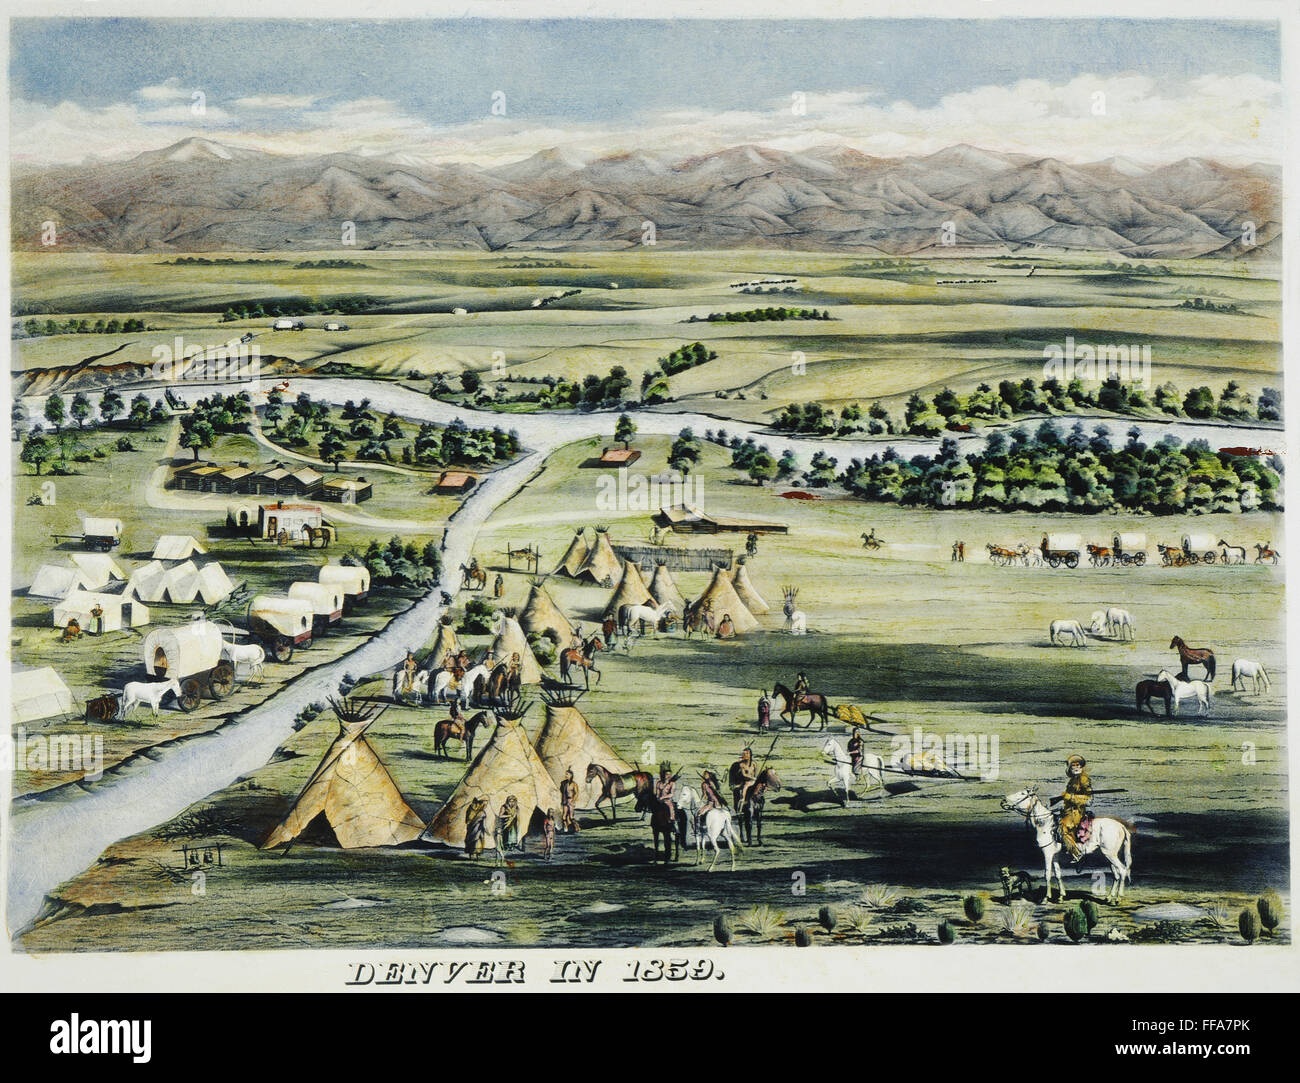 DENVER, COLORADO, 1859. /nDenver, Colorado, as it appeared in 1859: American lithograph, 19th century. Stock Photo